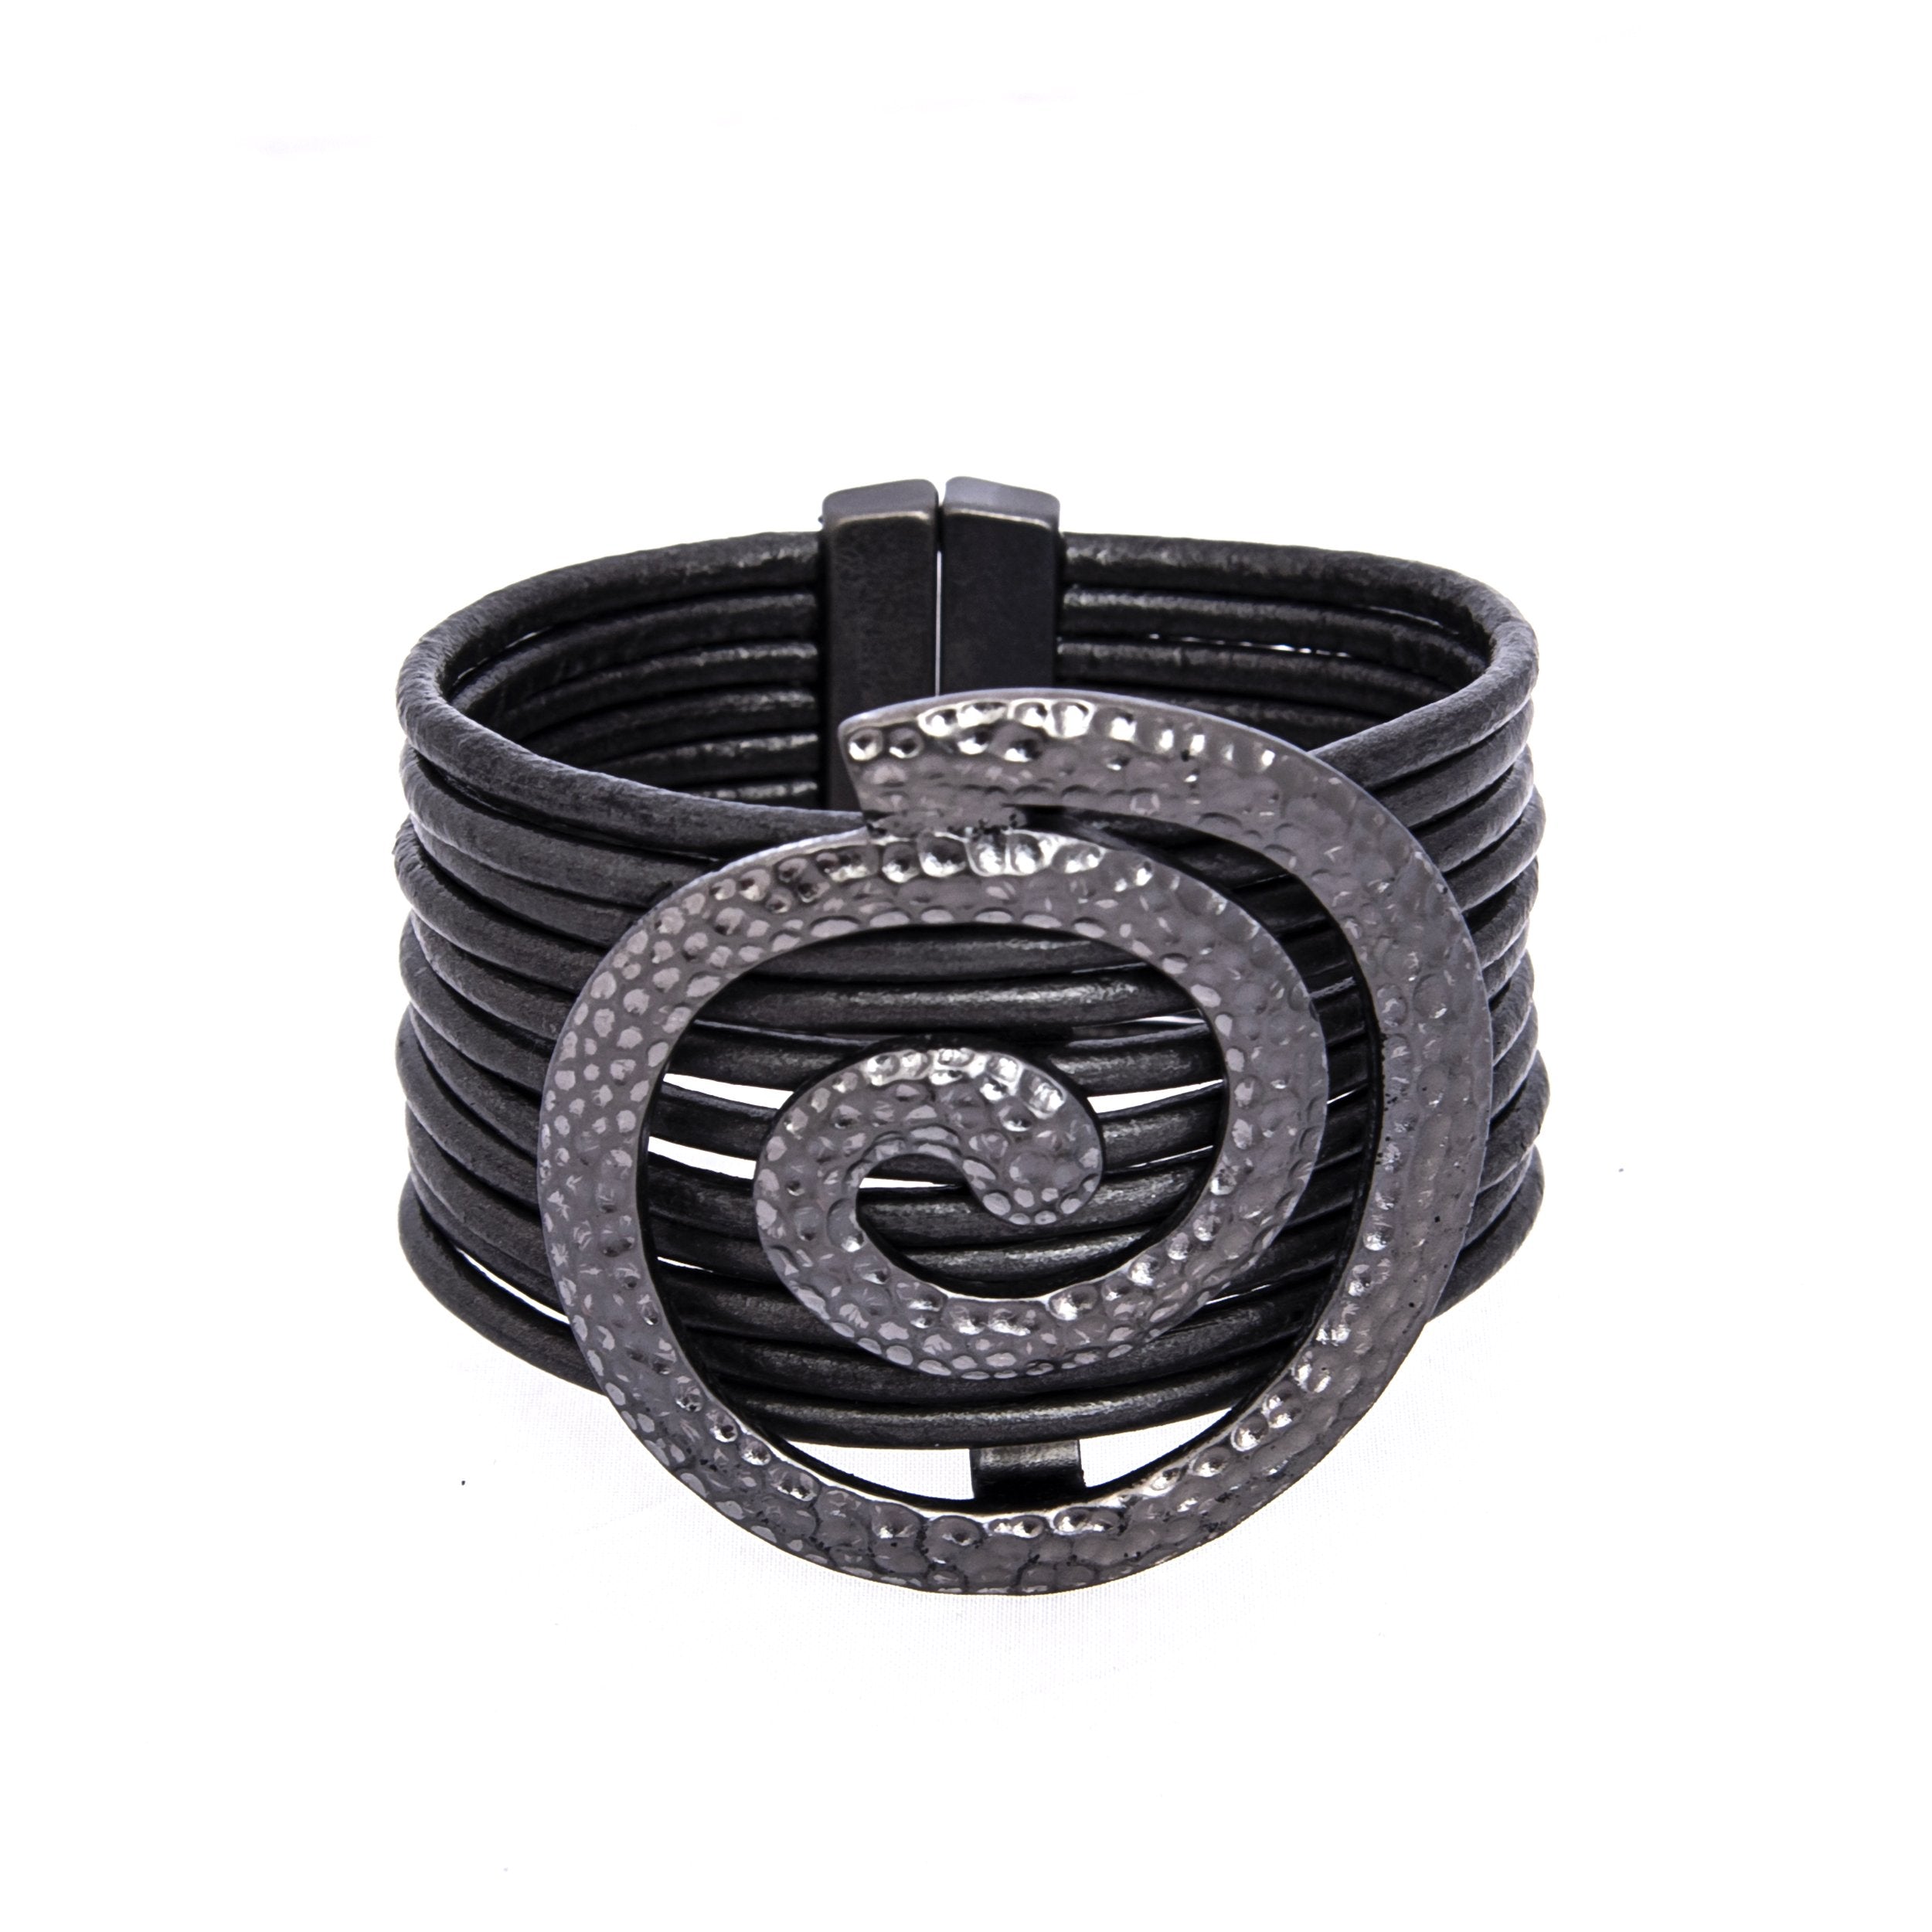 Okellas Multi-Strand Leather Magnet Bracelet With Sidewinder Gunmetal Gray